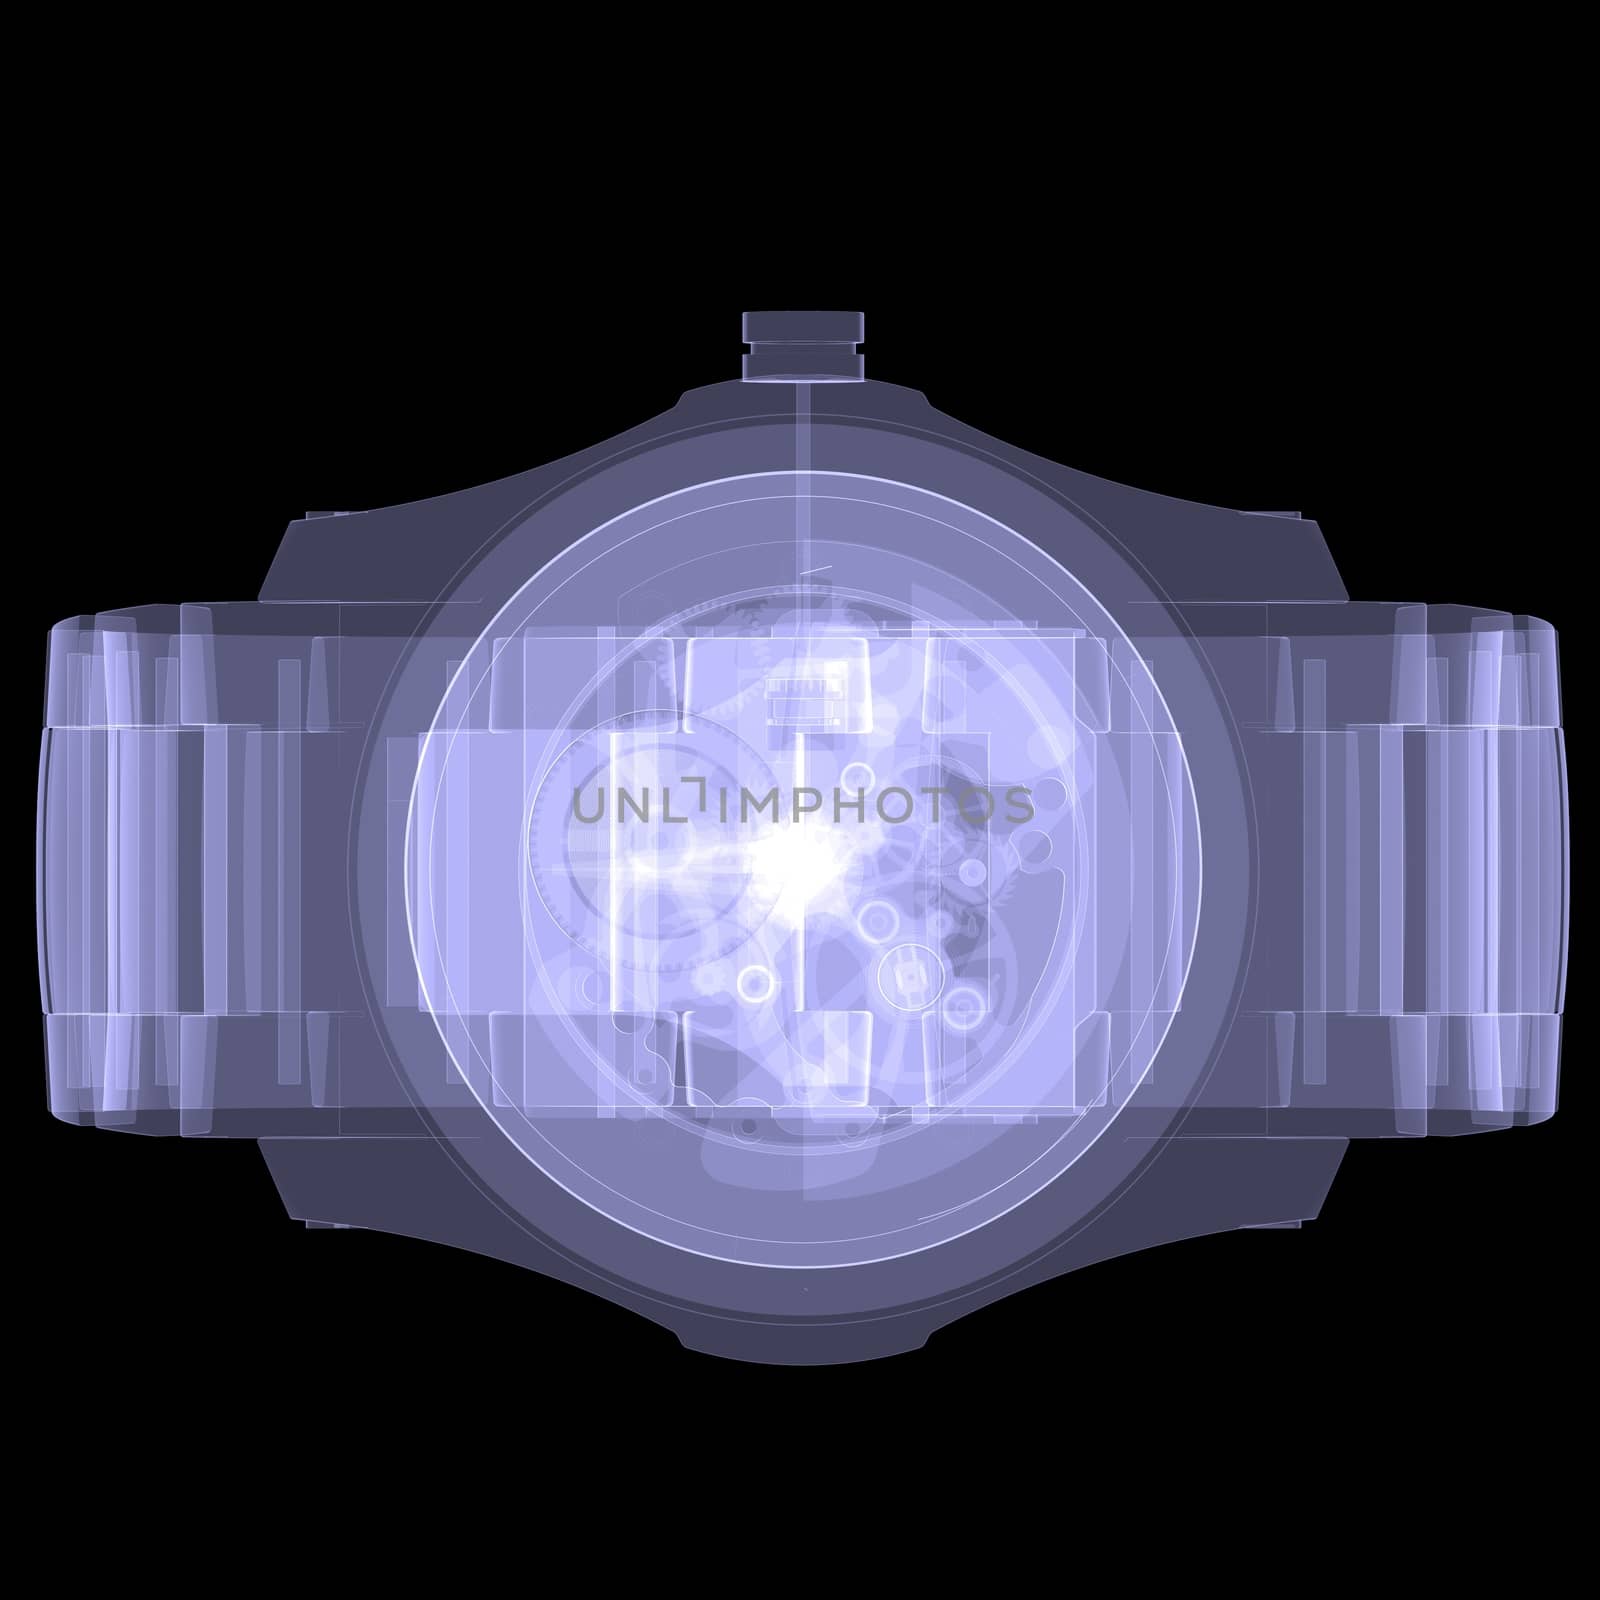 Clock mechanism. X-ray render by cherezoff